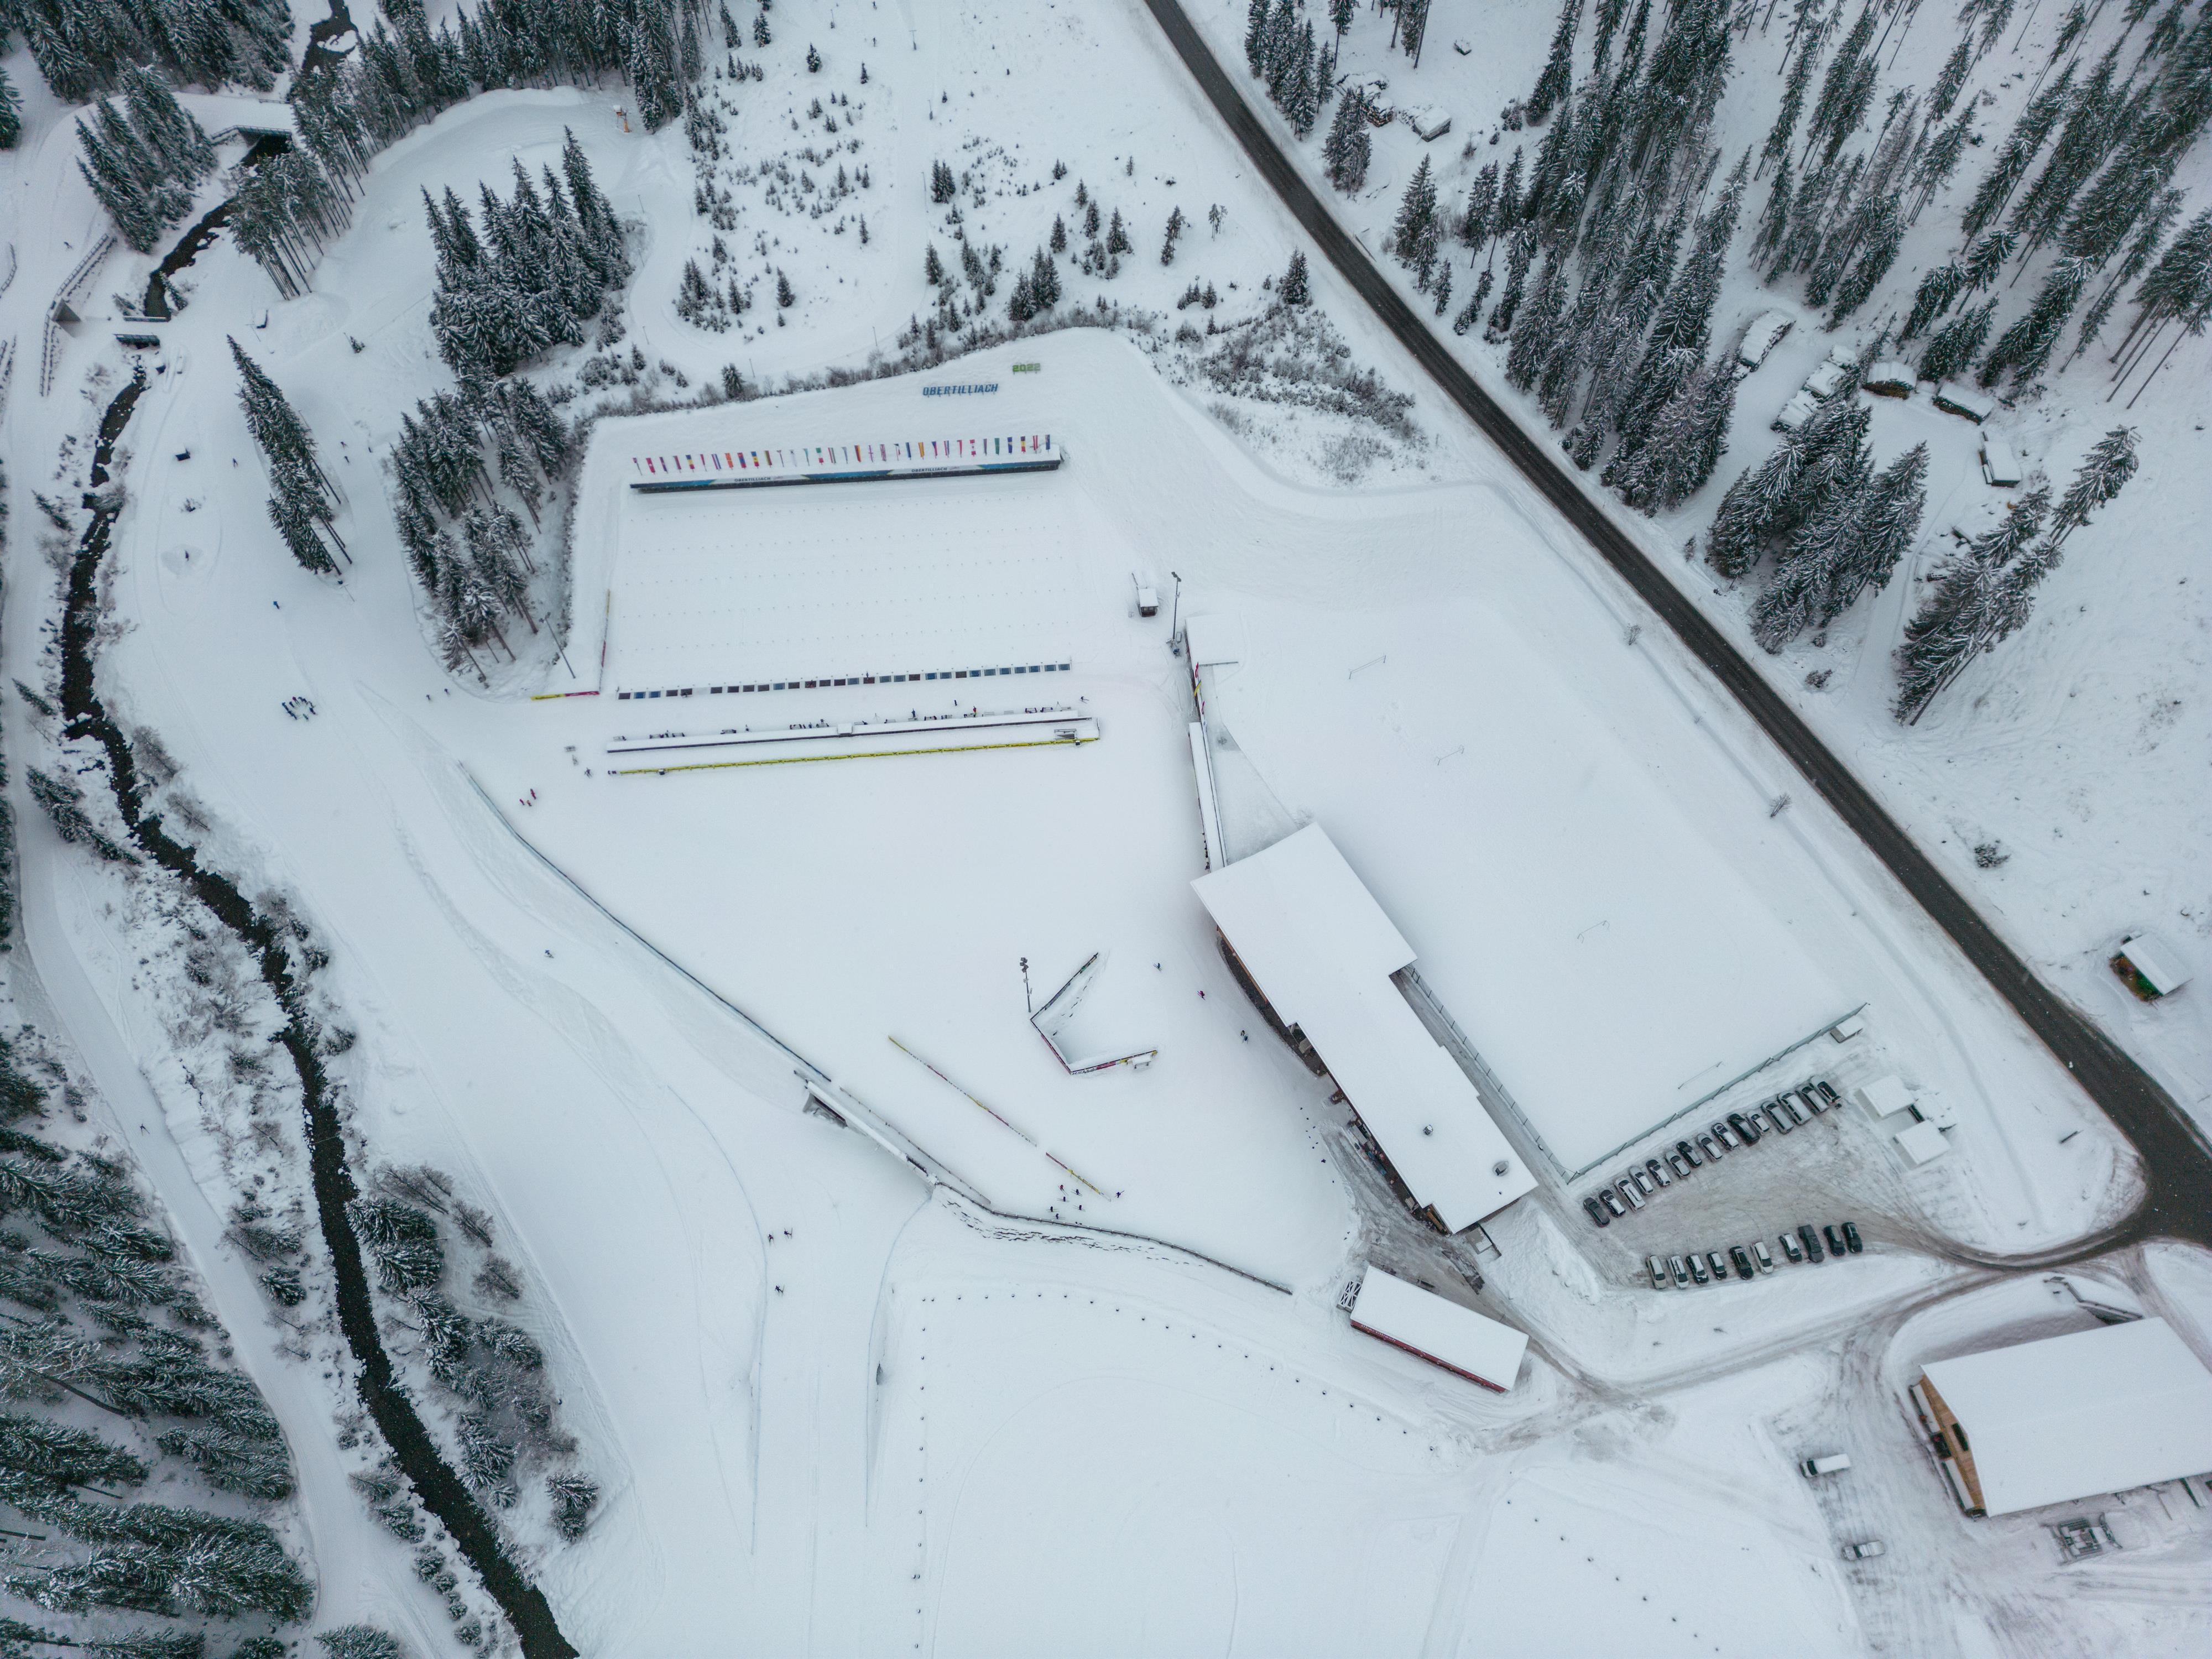 Biathlonzentrum.jpg